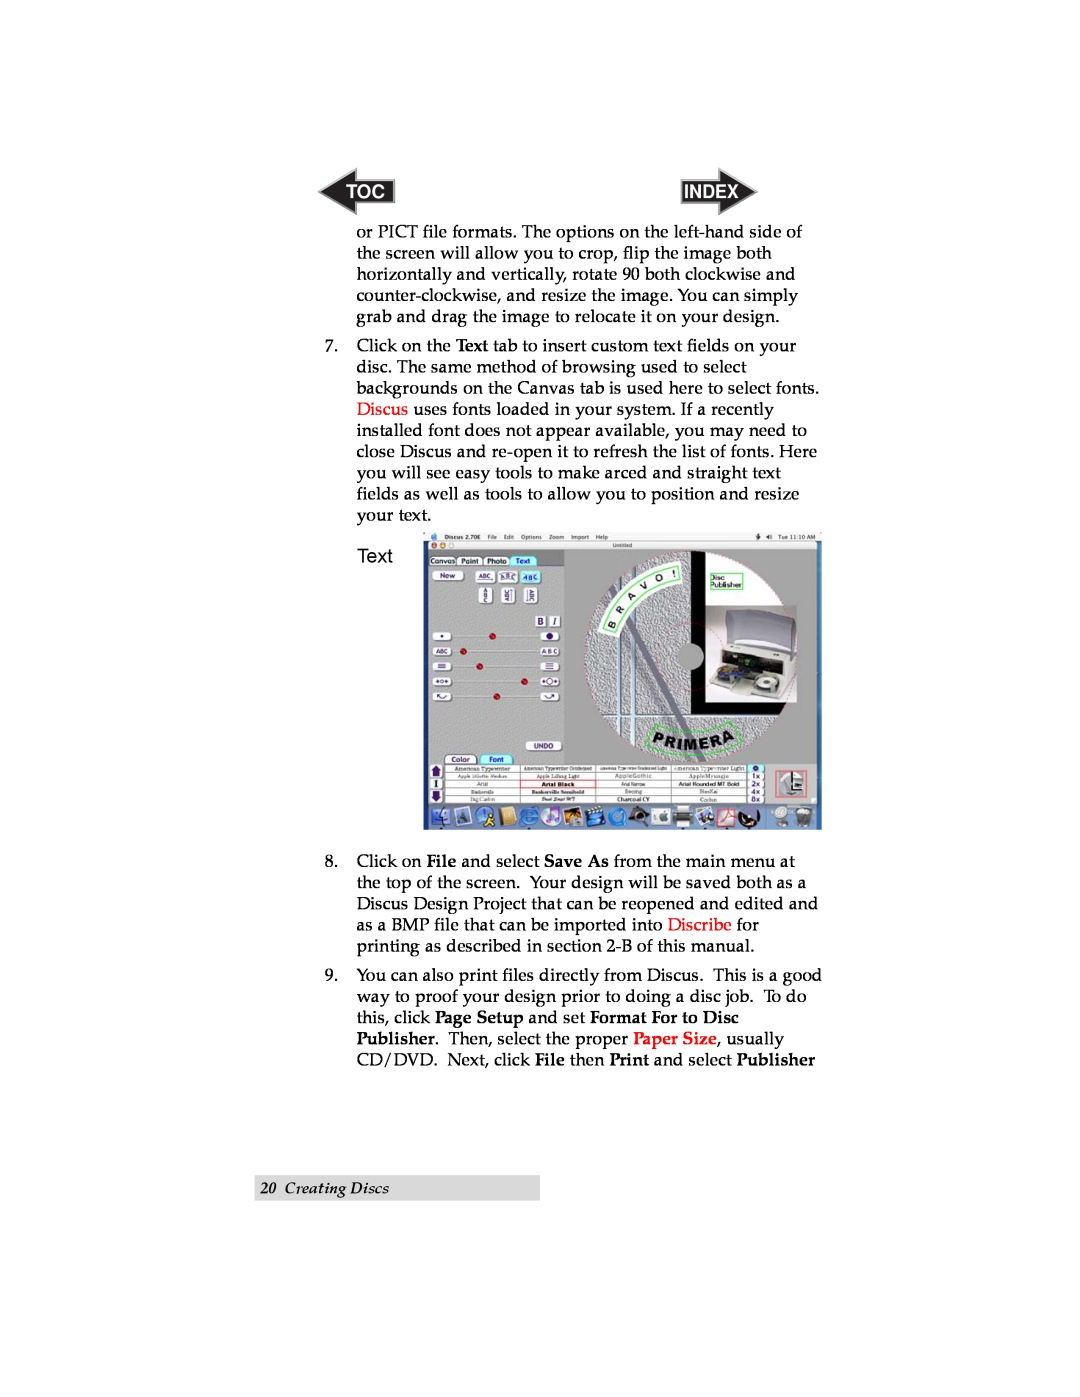 Primera Technology II user manual Text, Index, Creating Discs 